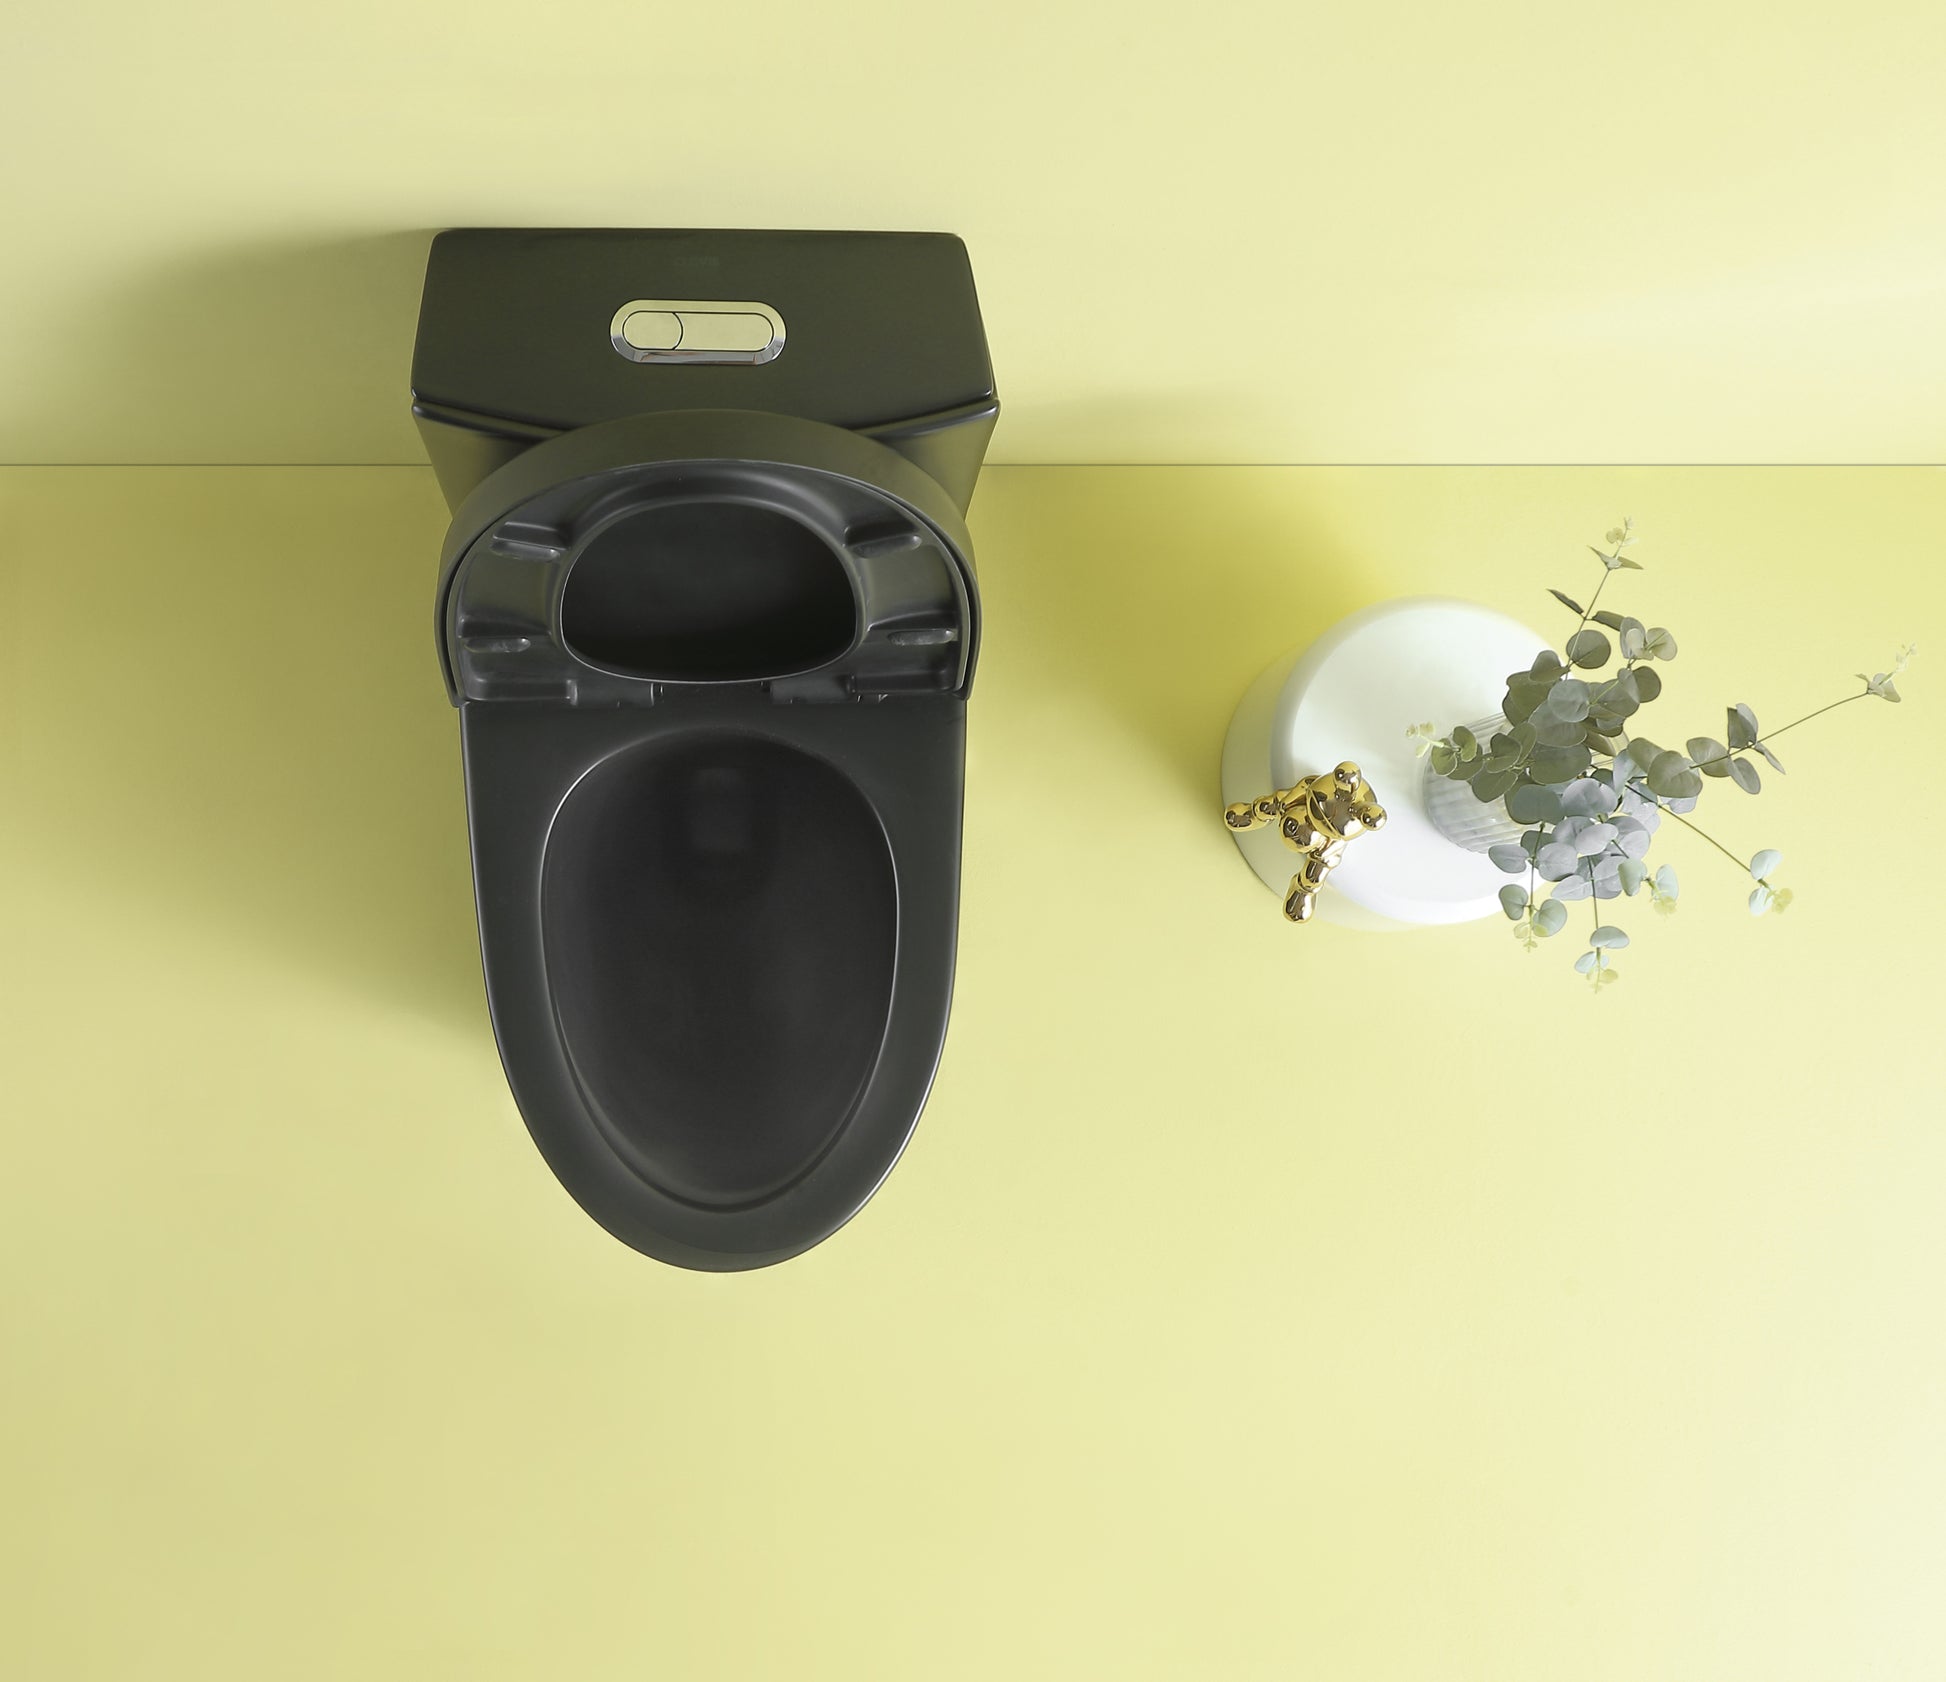 black toilet seat cover 23T01 MBP01 matte black-acrylic